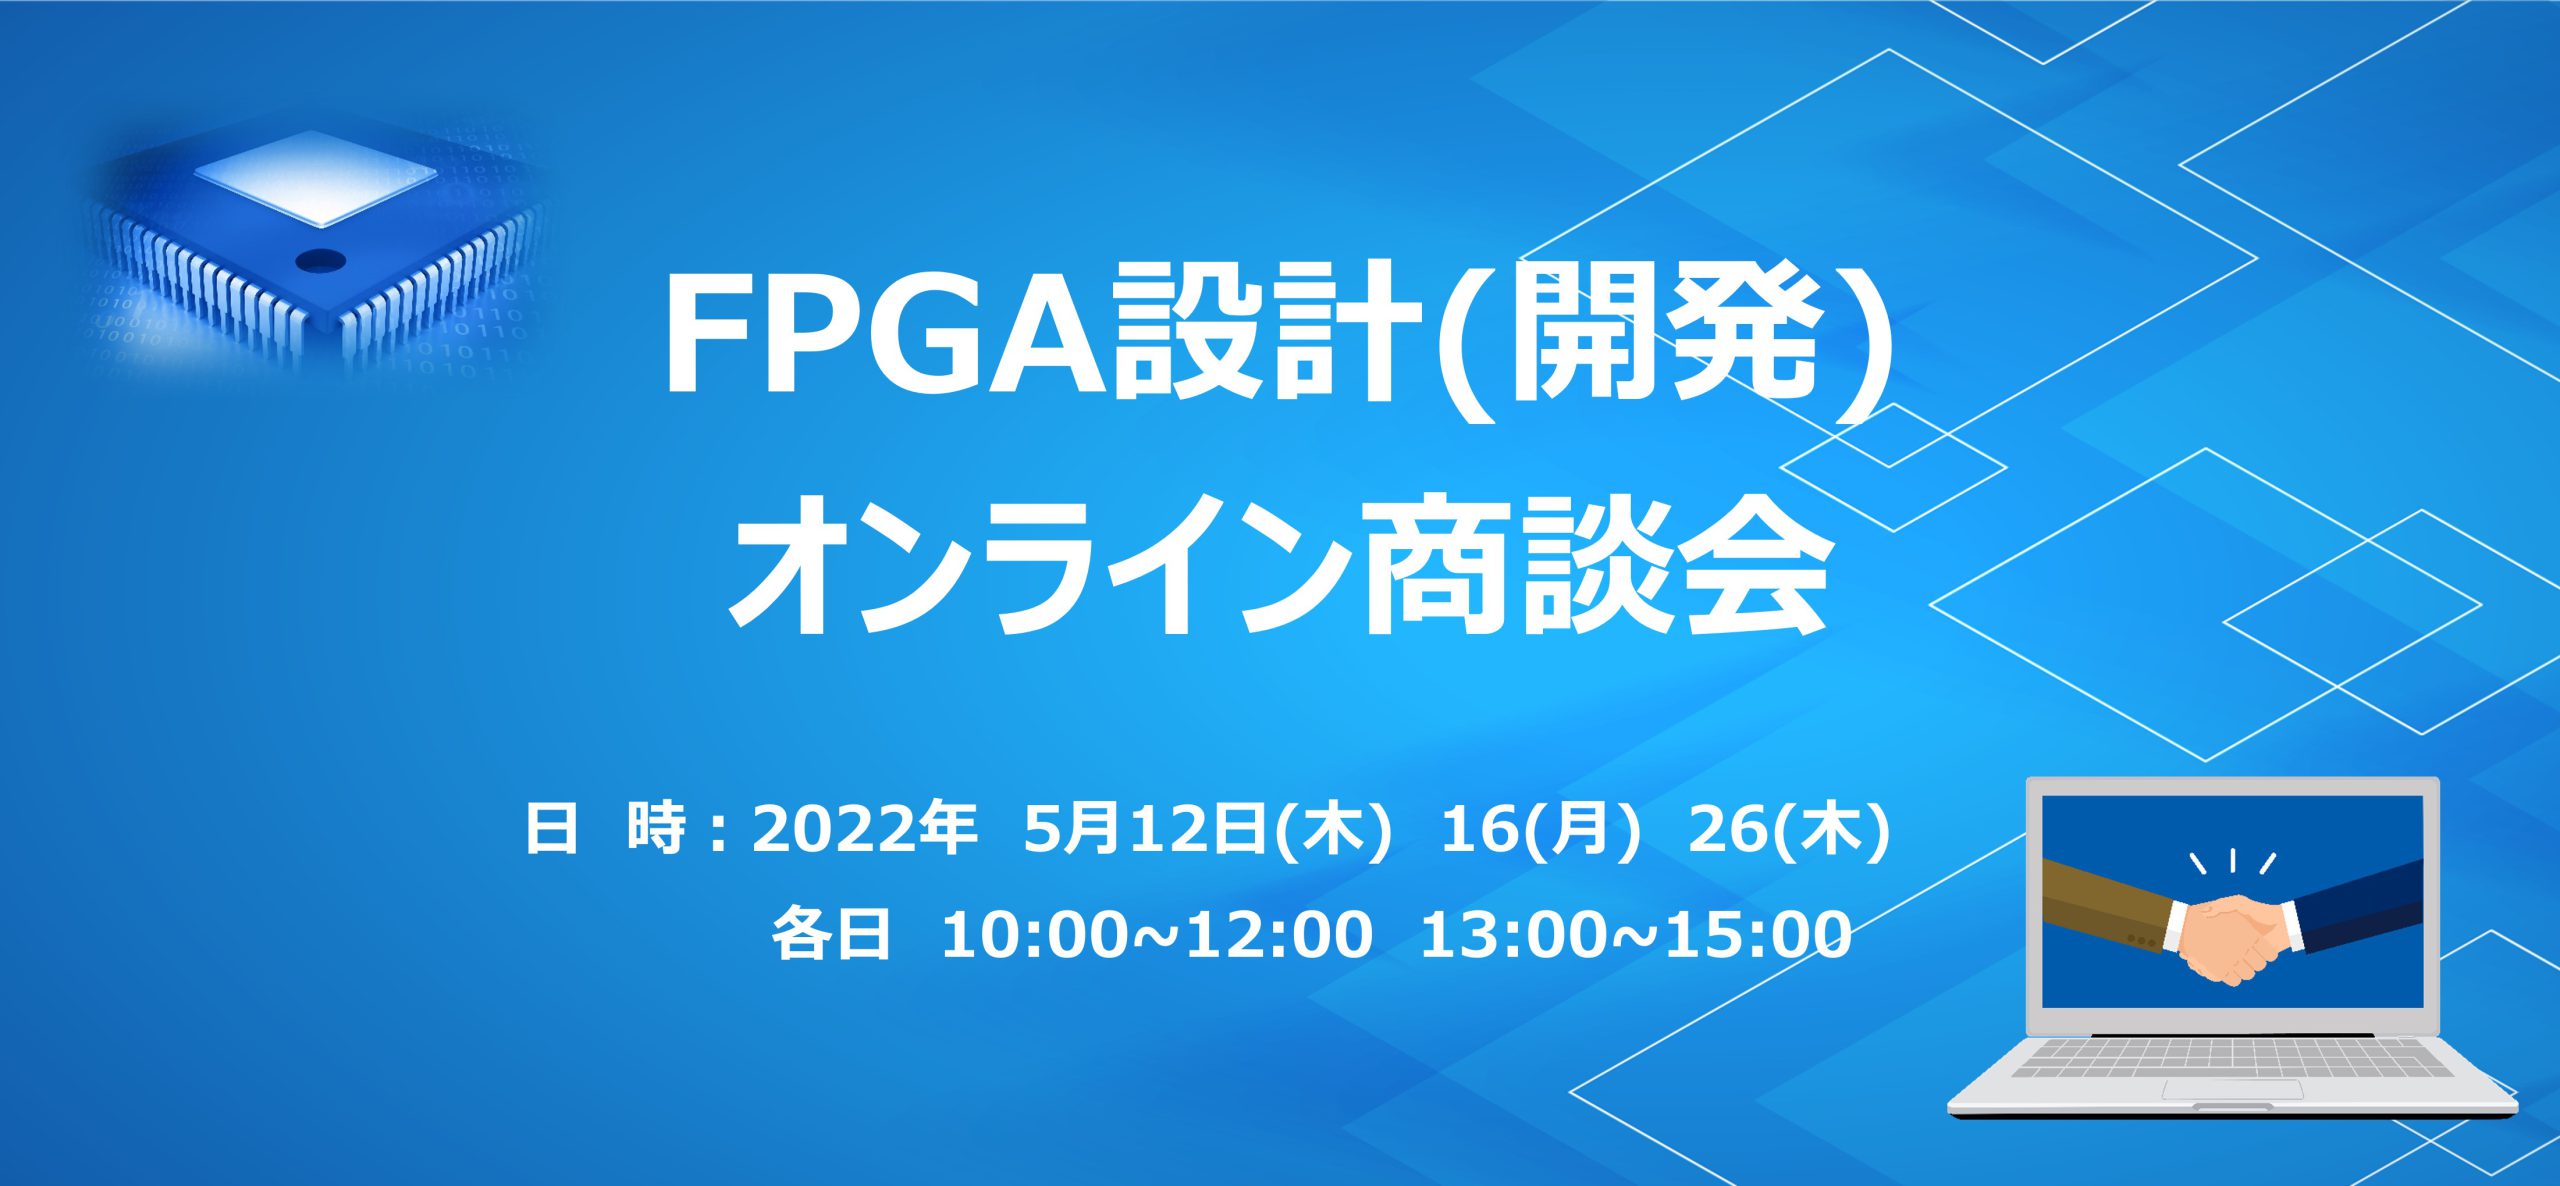 【FPGA設計(開発)】<br>オンライン商談会開催のお知らせ